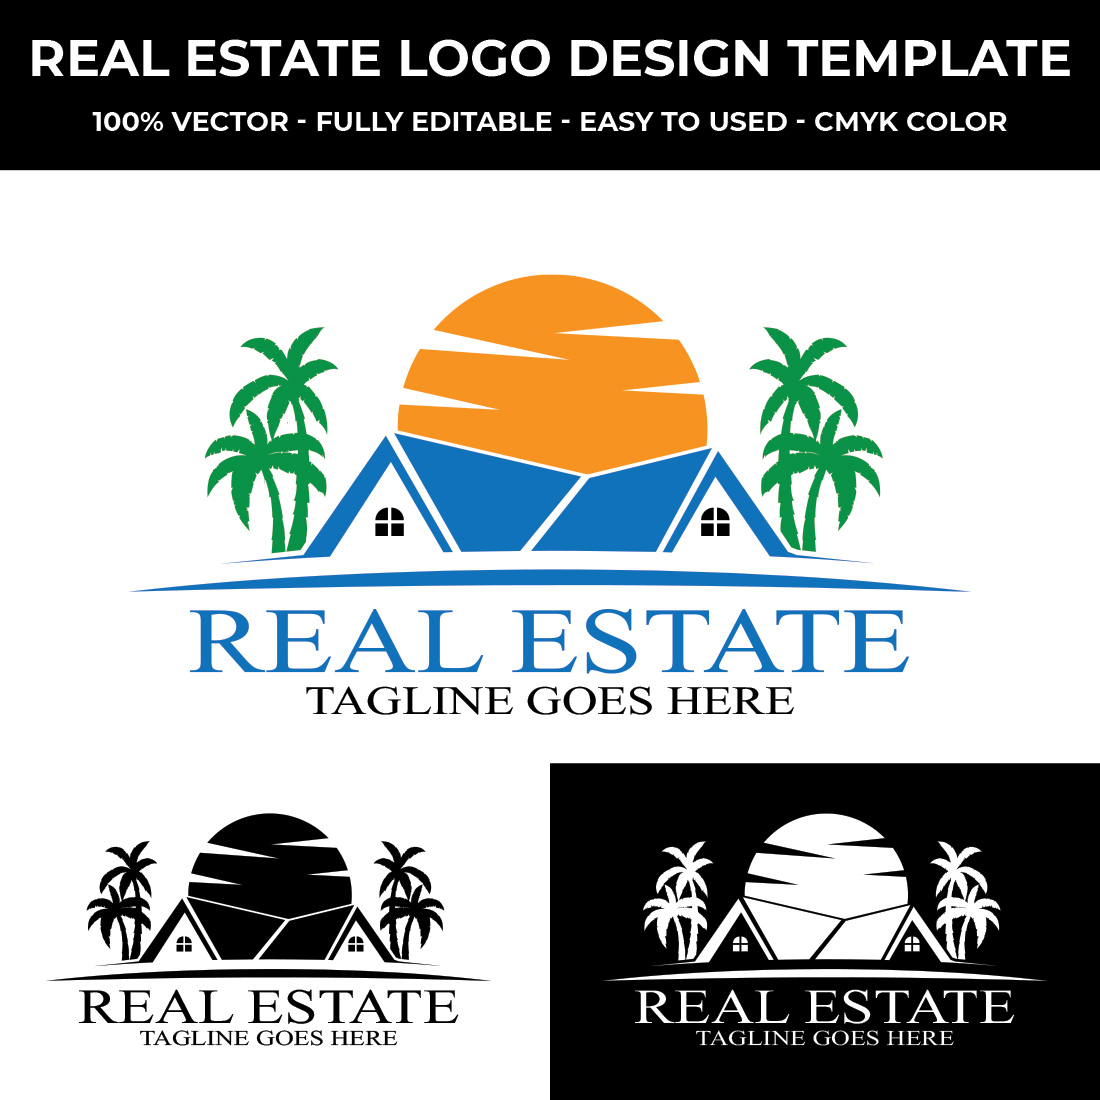 Real Estate Logo Design Template cover image.